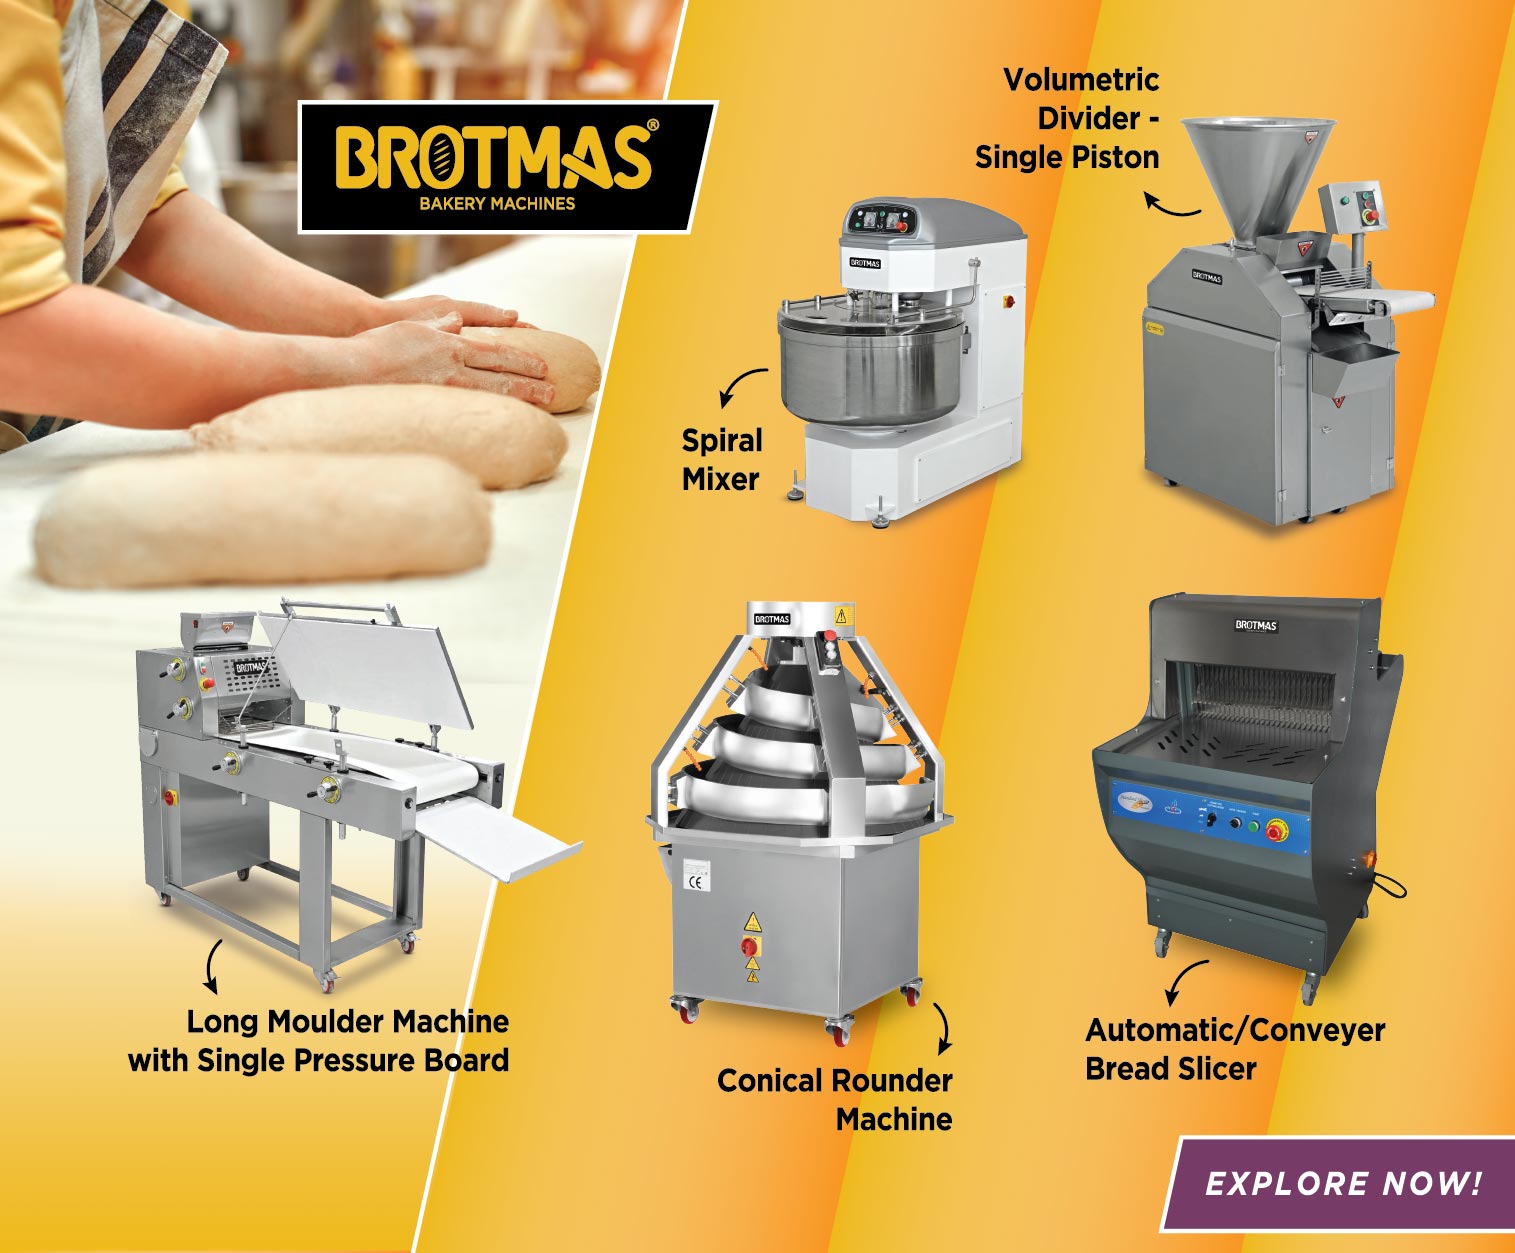 Brothmas - Spiral Mixer | Conical Rounder | Volumetric Divider- Single Piston | Automatic/Conveyer Bread Slicer